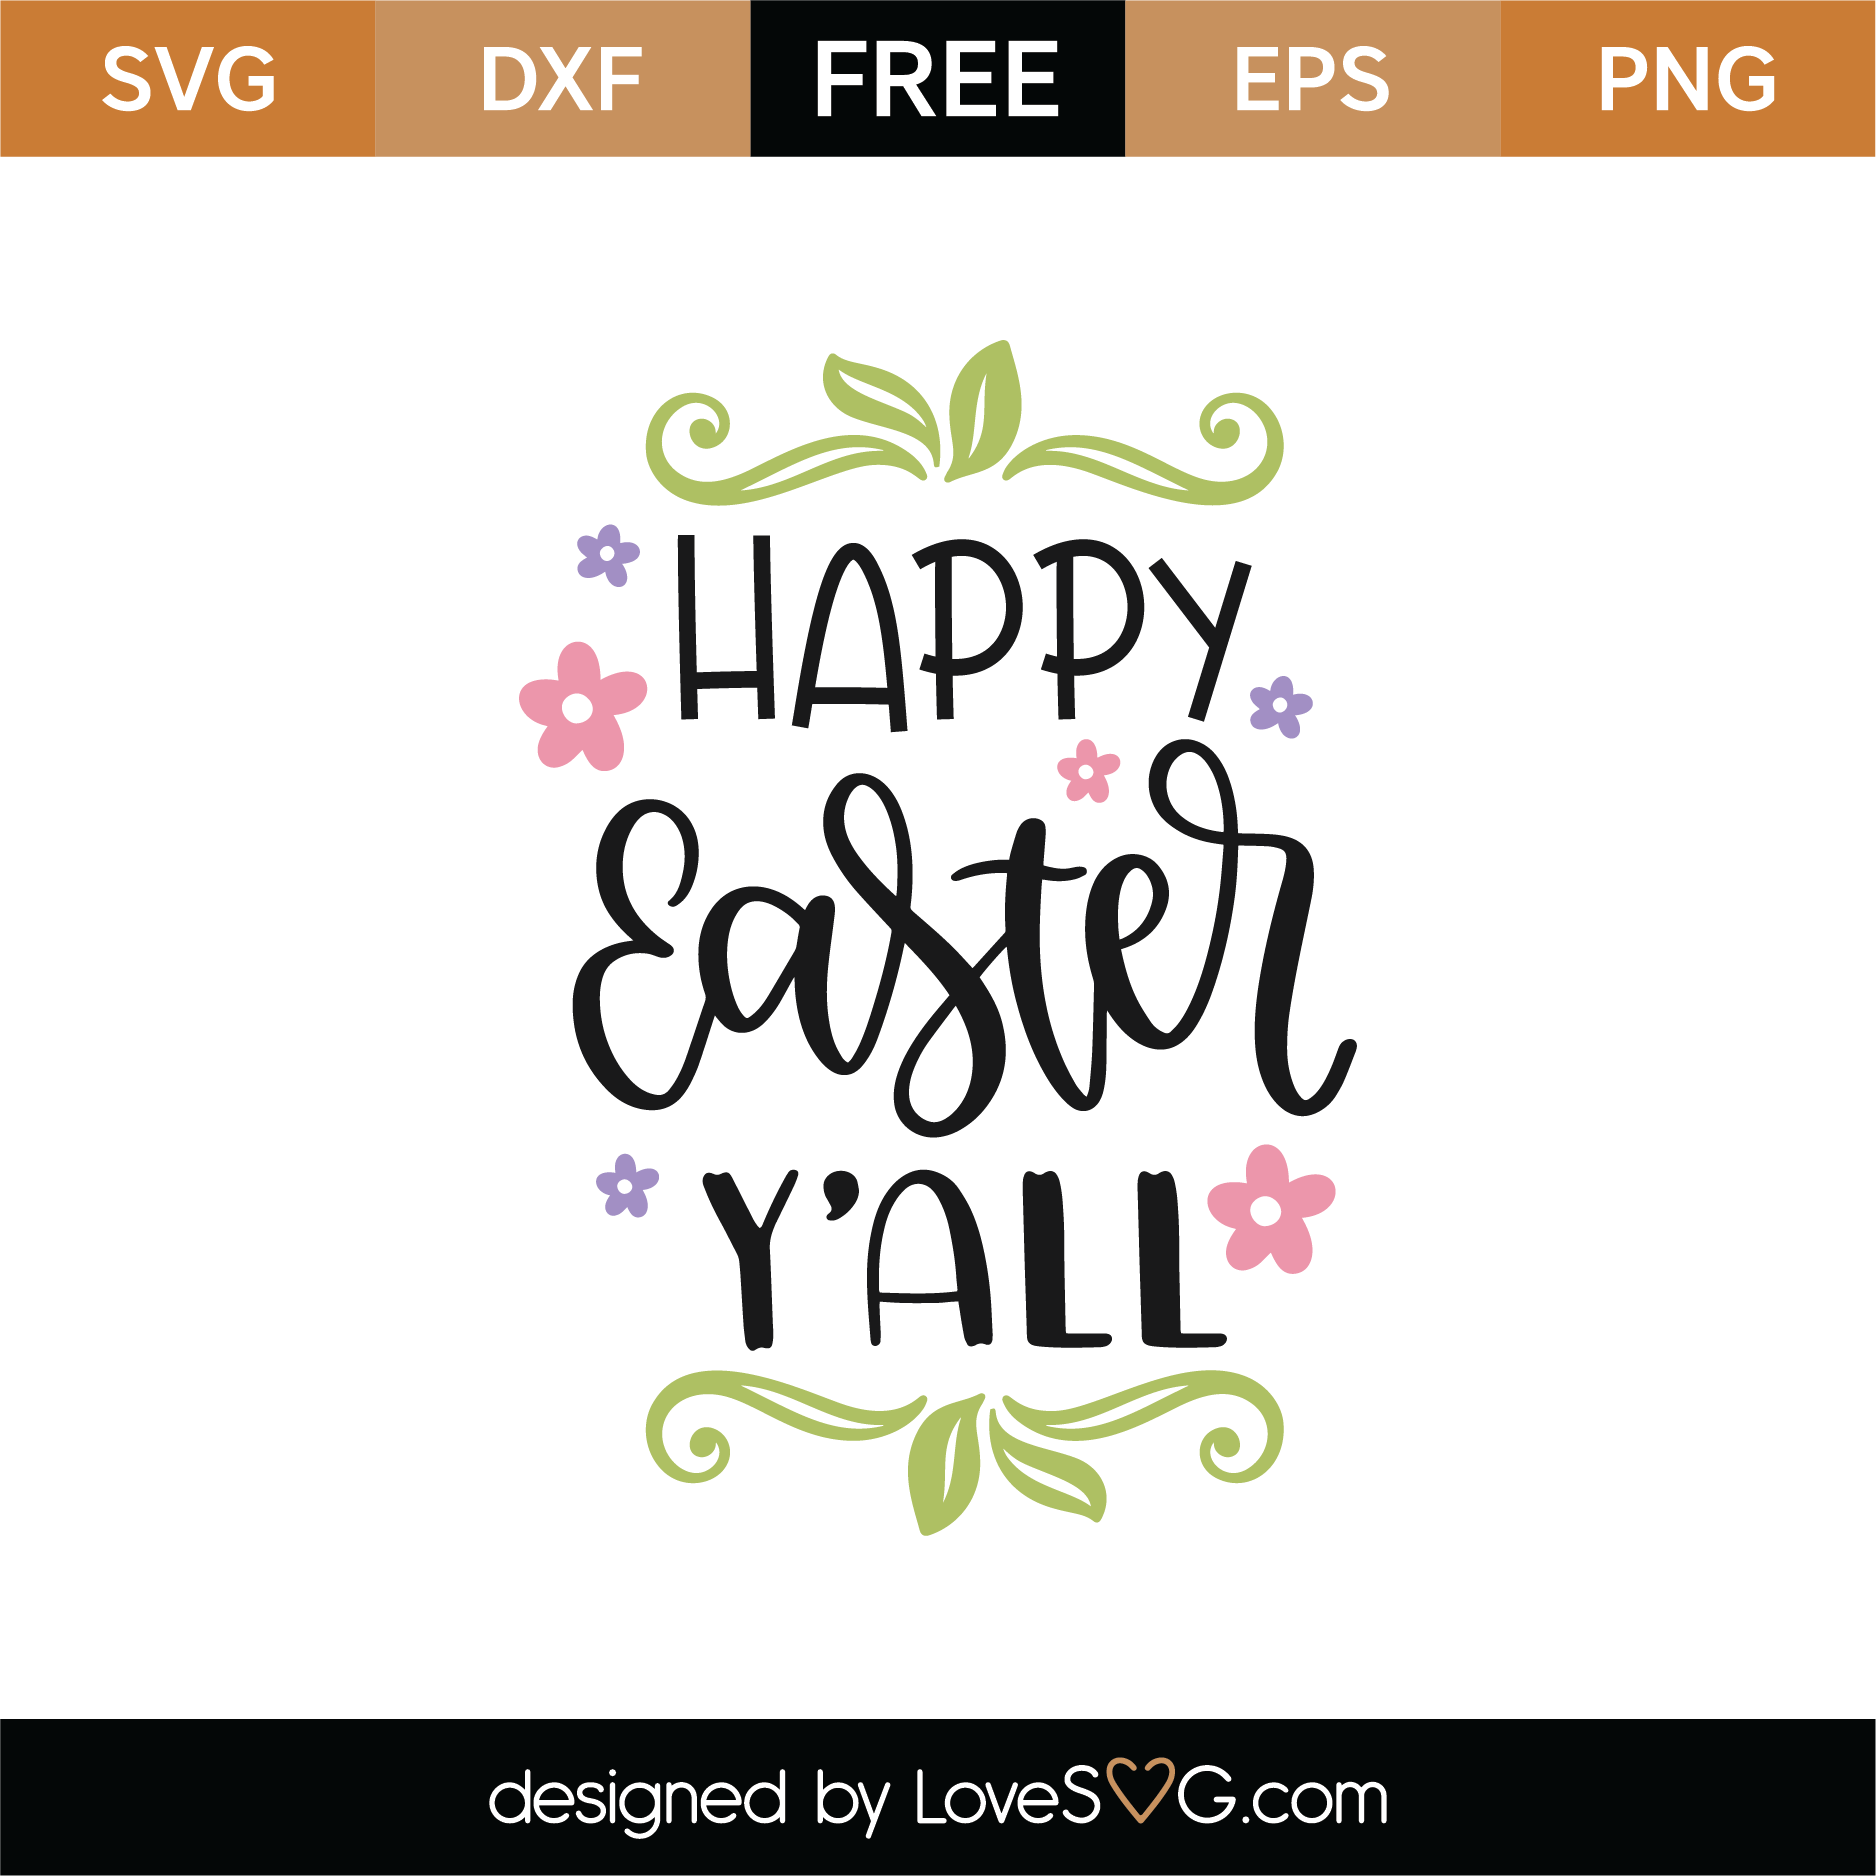 Free Happy Easter Y'all SVG Cut File | Lovesvg.com